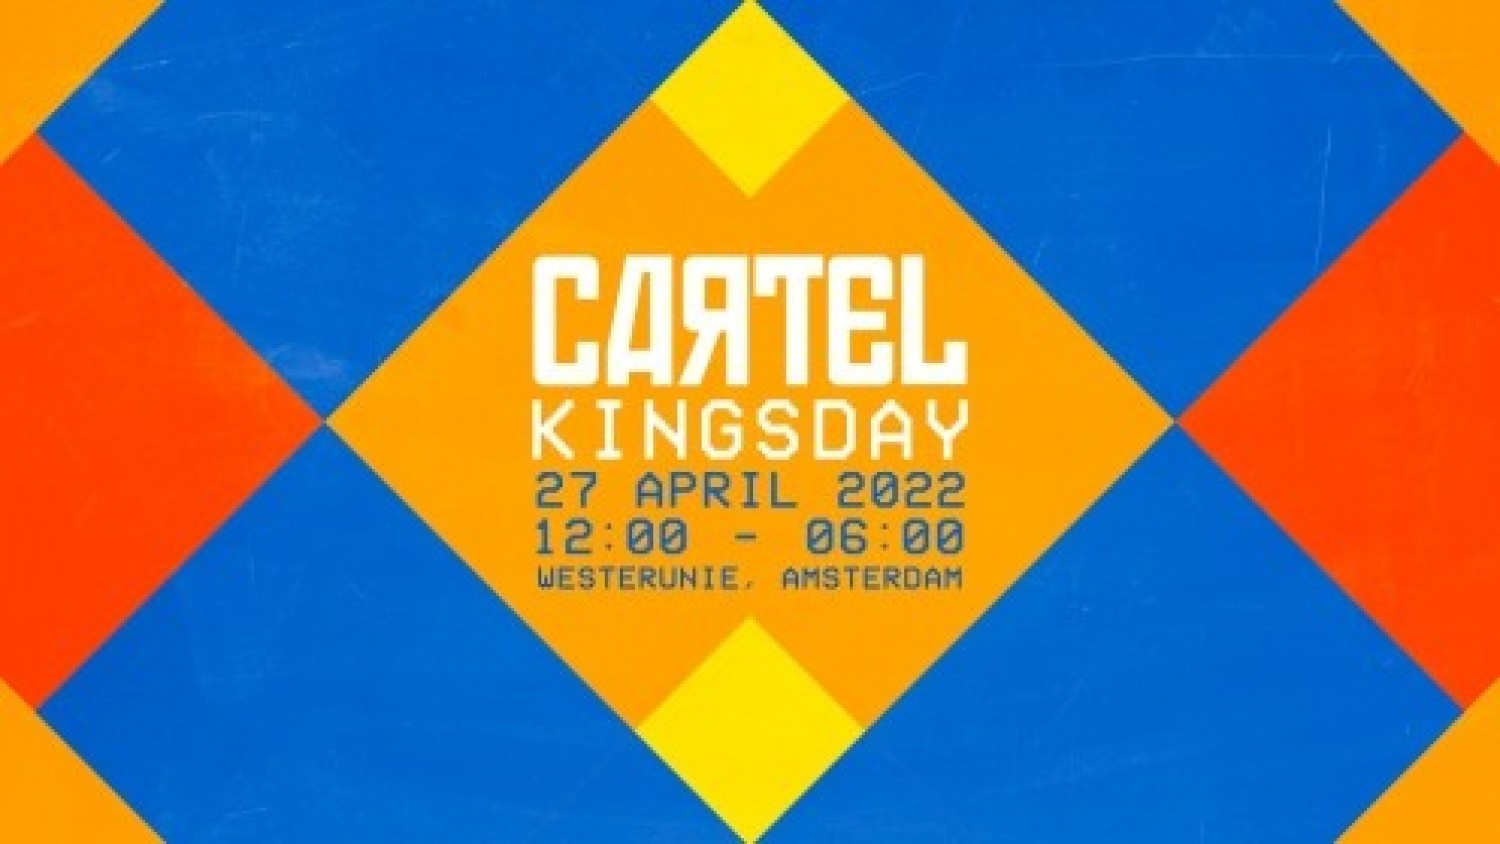 Cartel Kingsday 2022